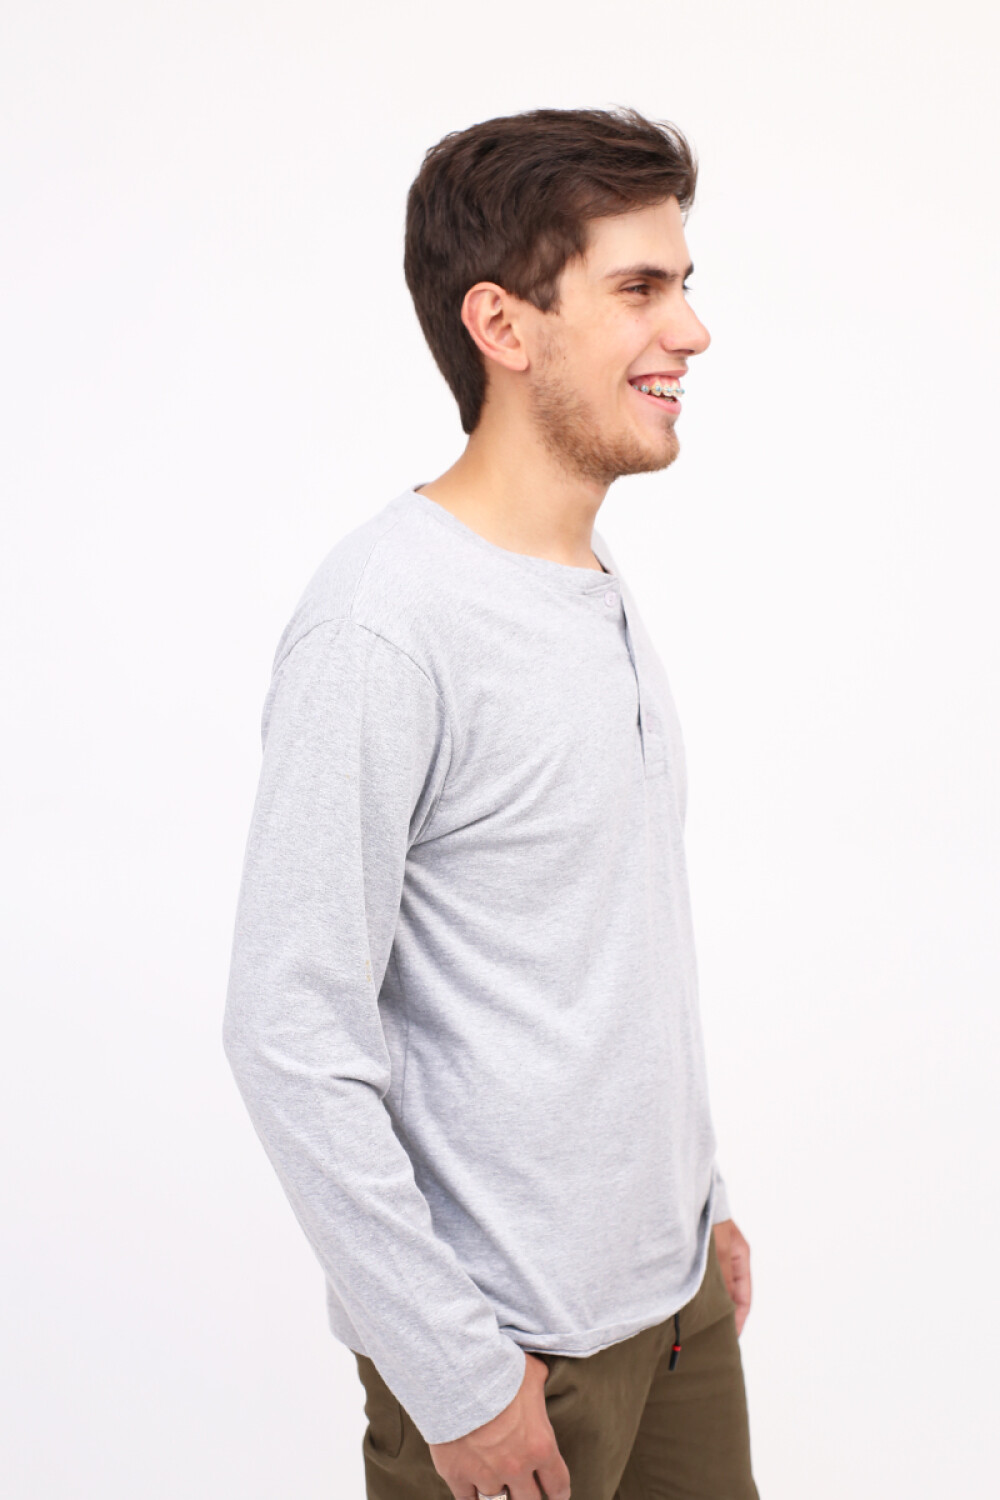 Camiseta de compresión de manga larga con cuello redondo para hombre,  básica, ajuste delgado, color liso, camiseta interior lisa